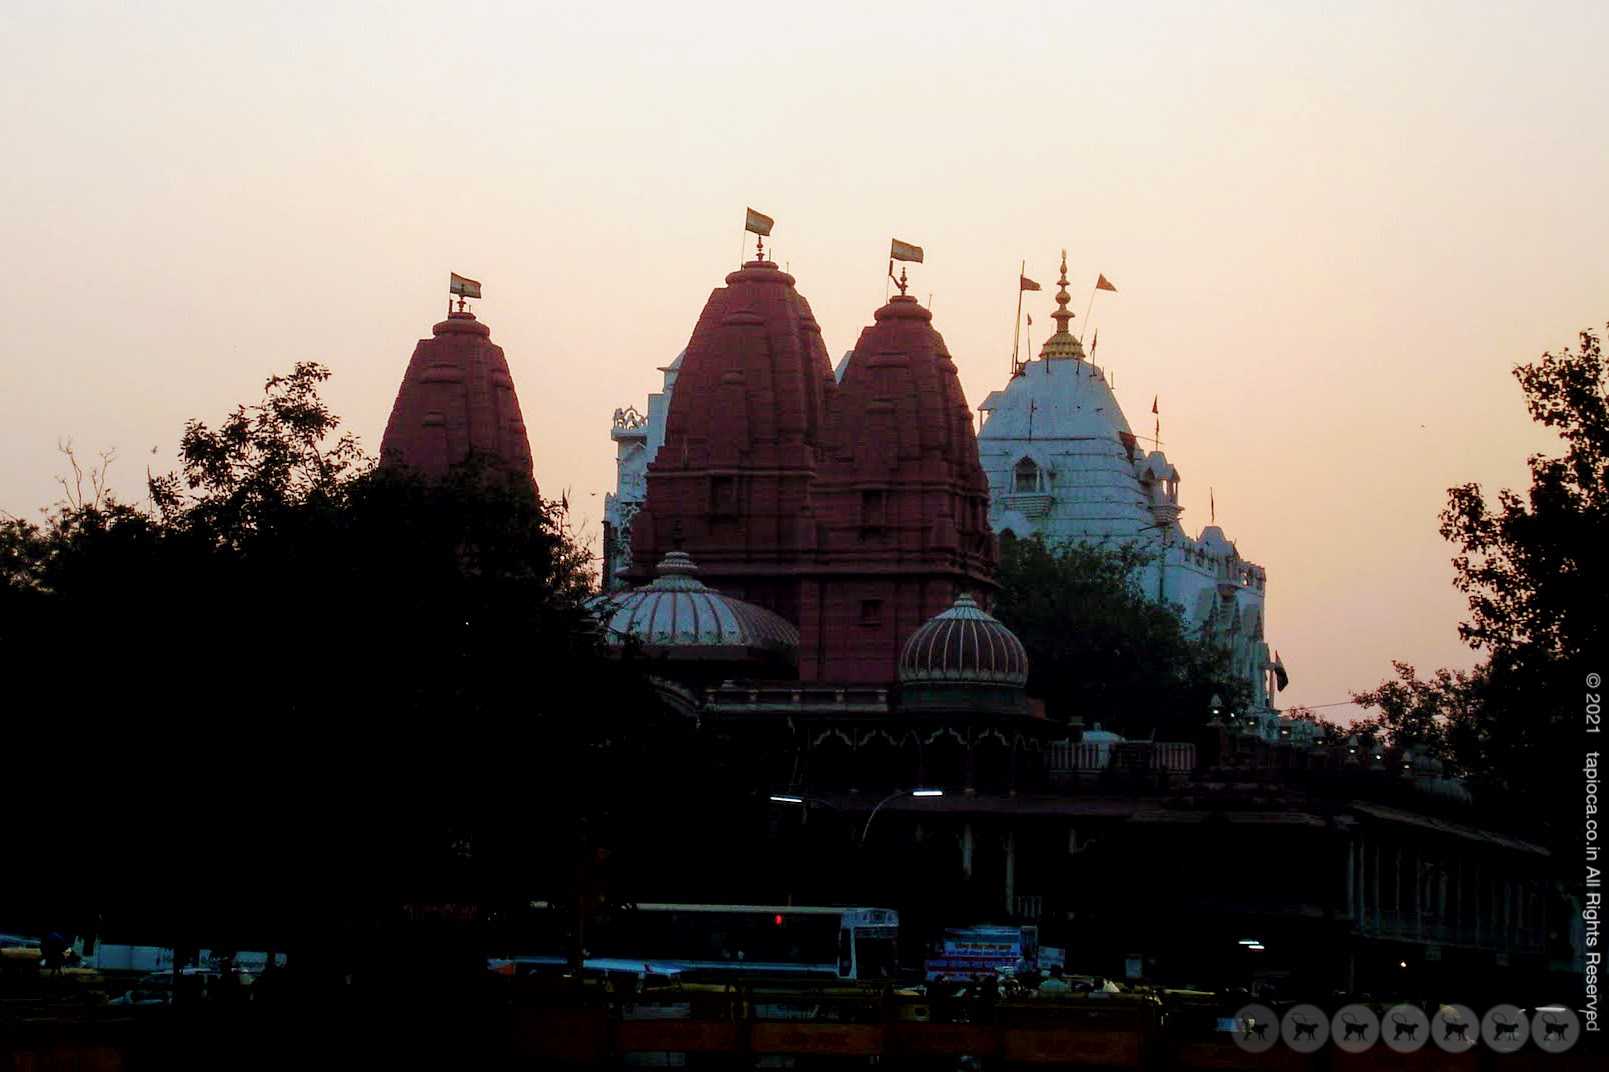 Shri Digambar Jain Lal Mandir. Oldest and best-known Jain temple in Delhi